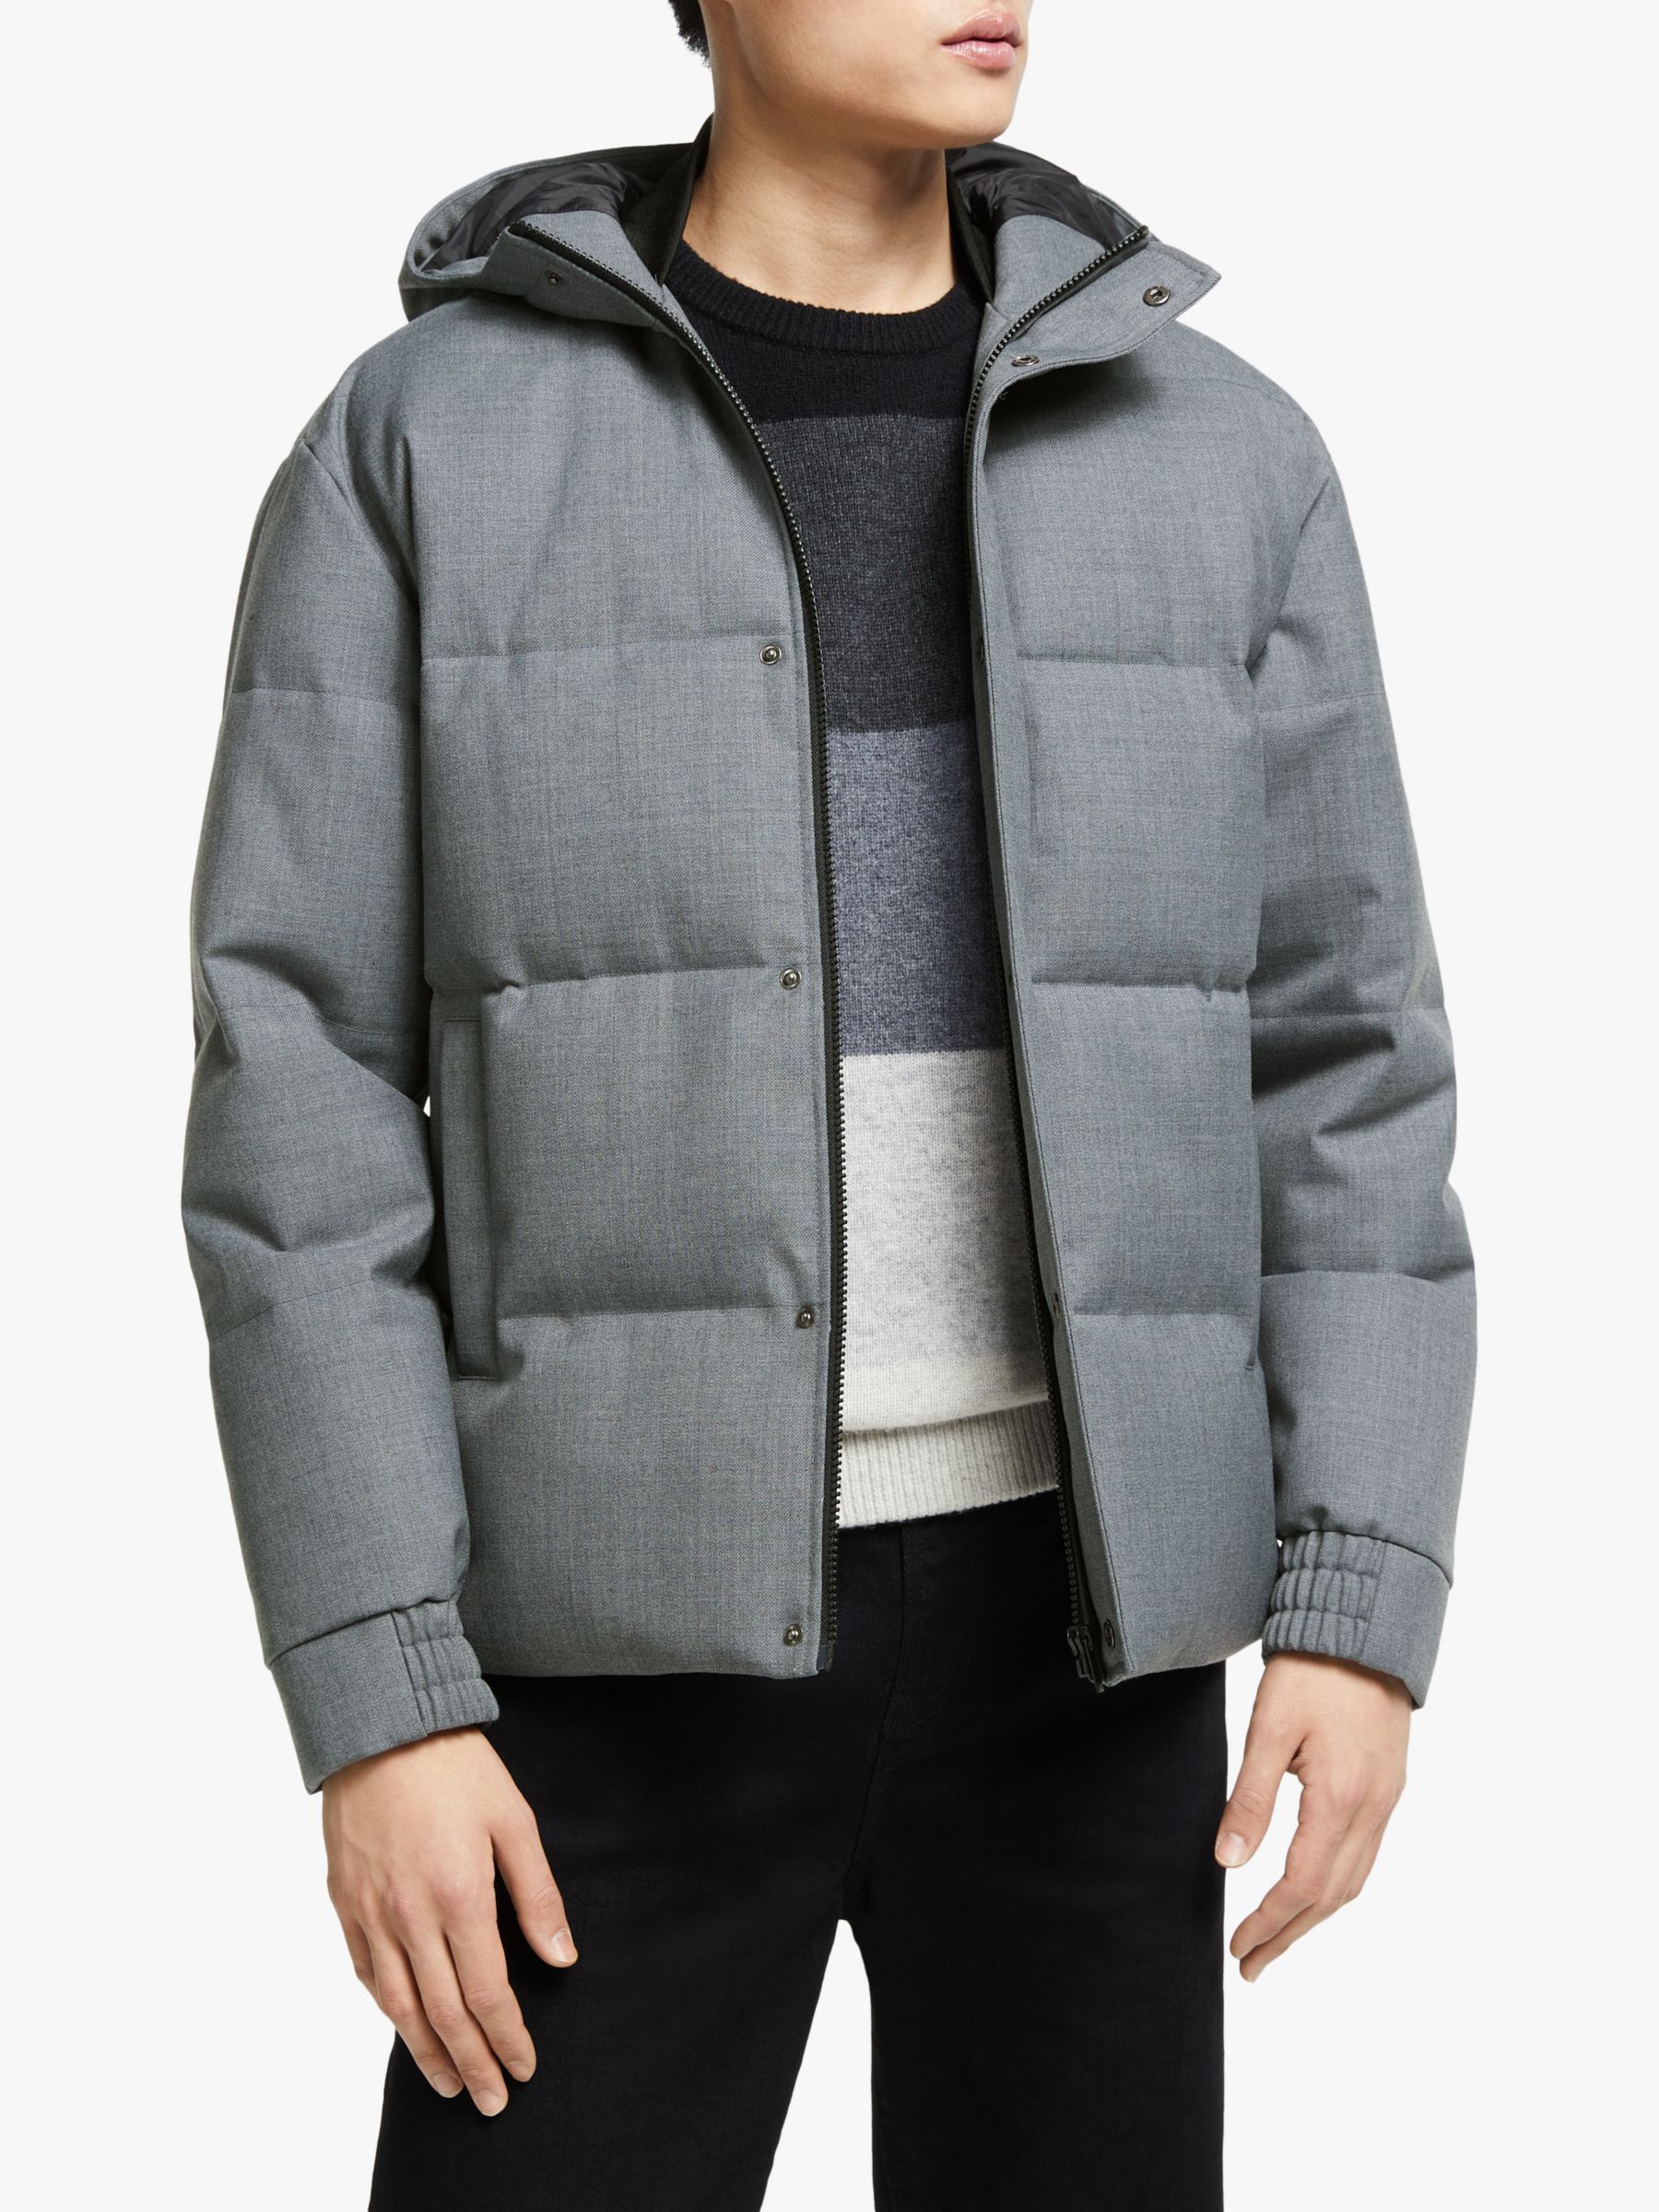 grey puffer jacket mens